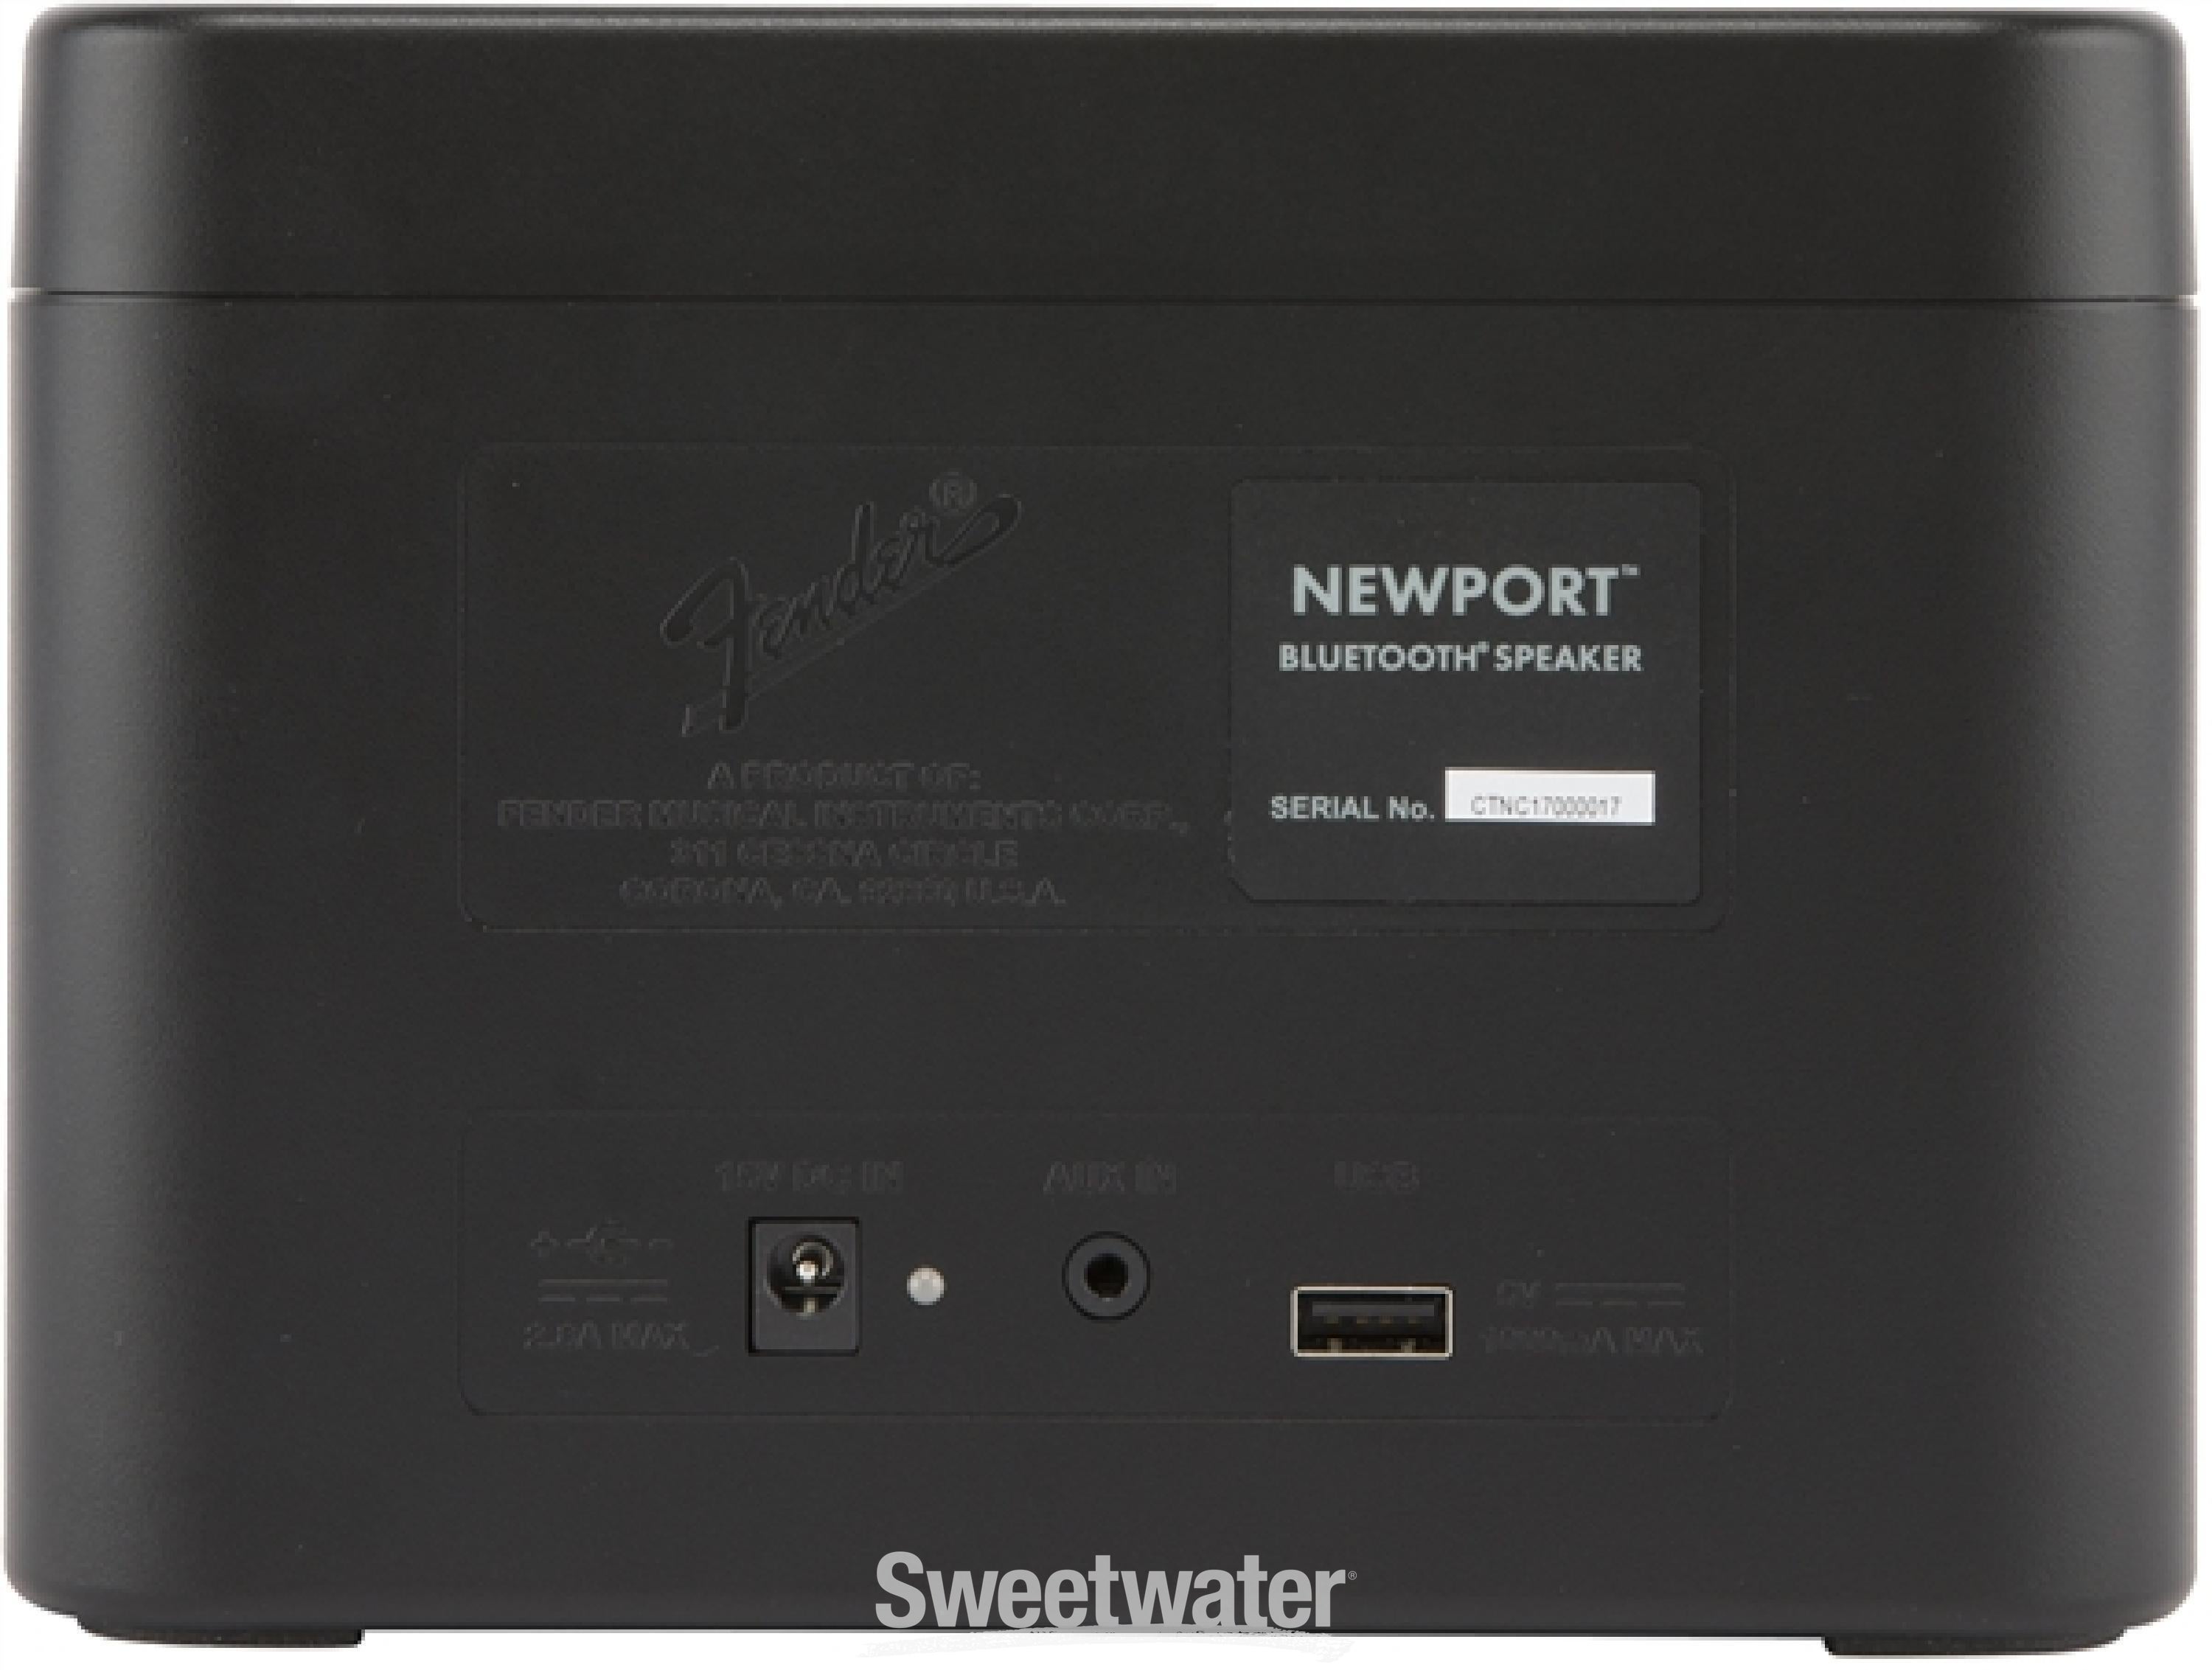 Fender Newport Portable Bluetooth Speaker Reviews | Sweetwater